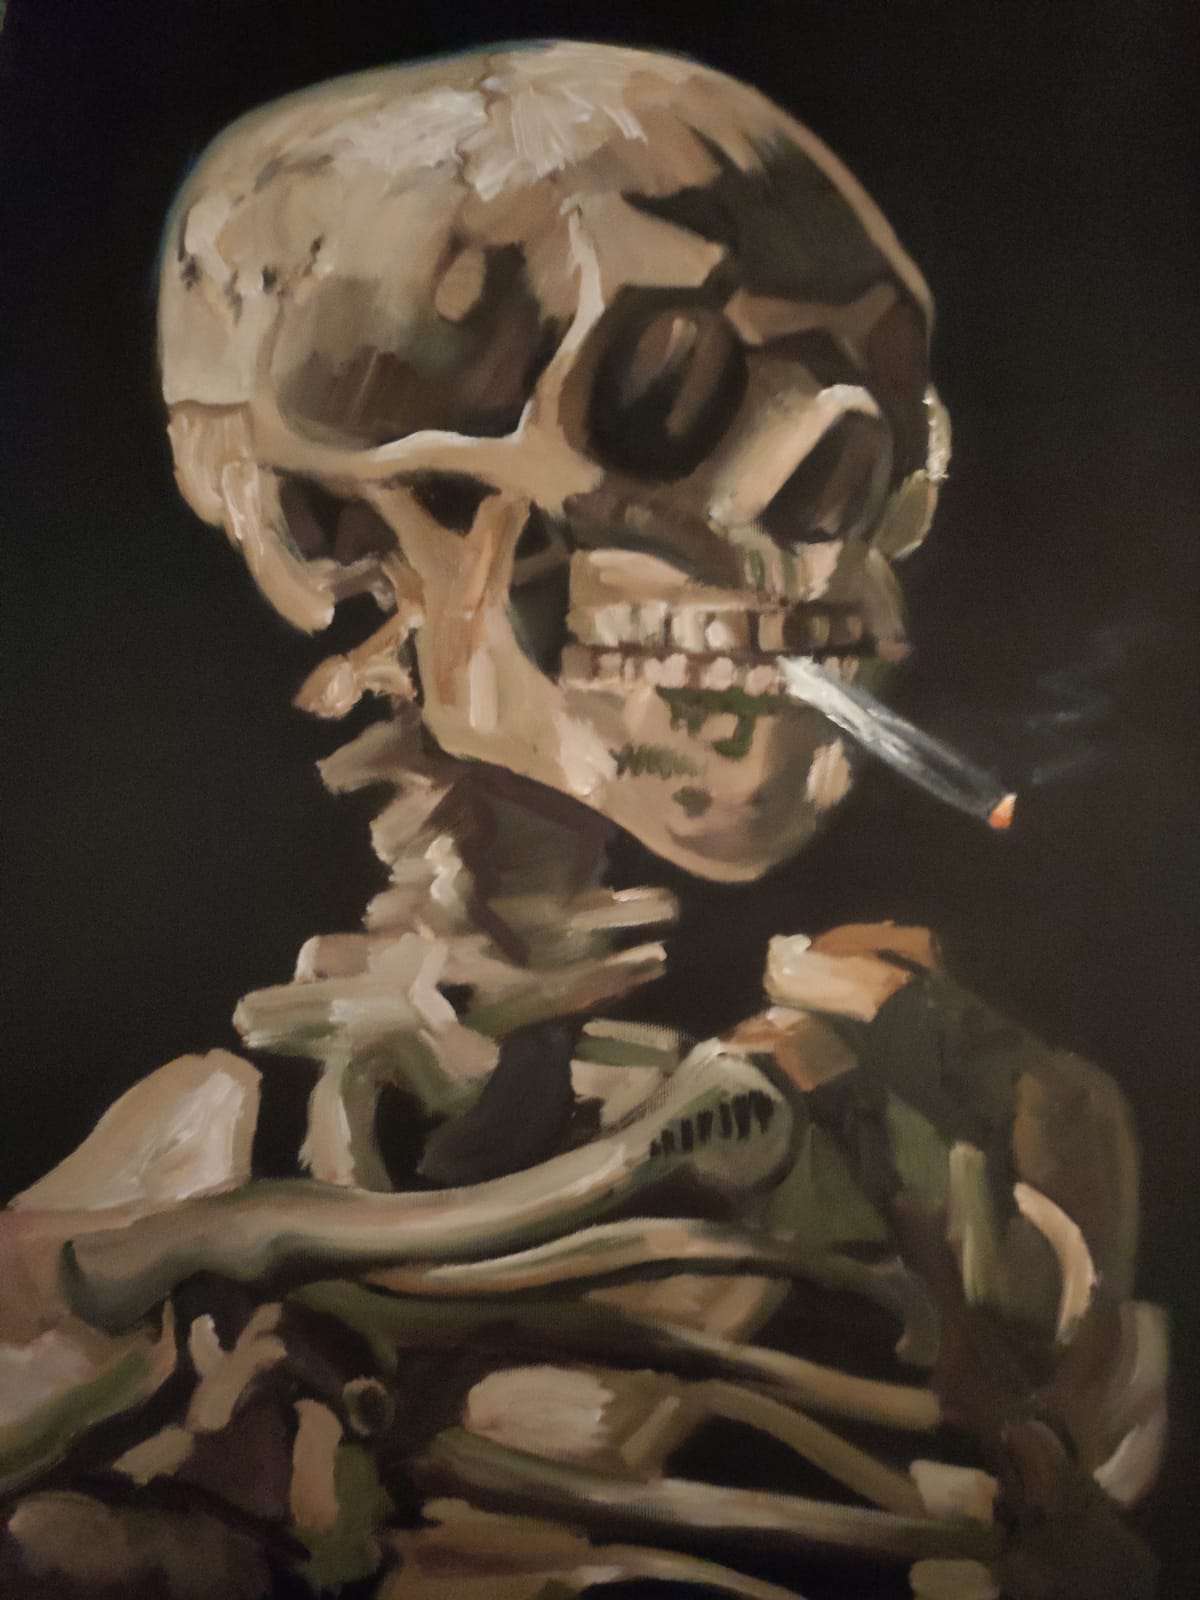 Skull with burning cigarette, Van Gogh, art reproduction, painting reproduction, Van Gogh painting, 